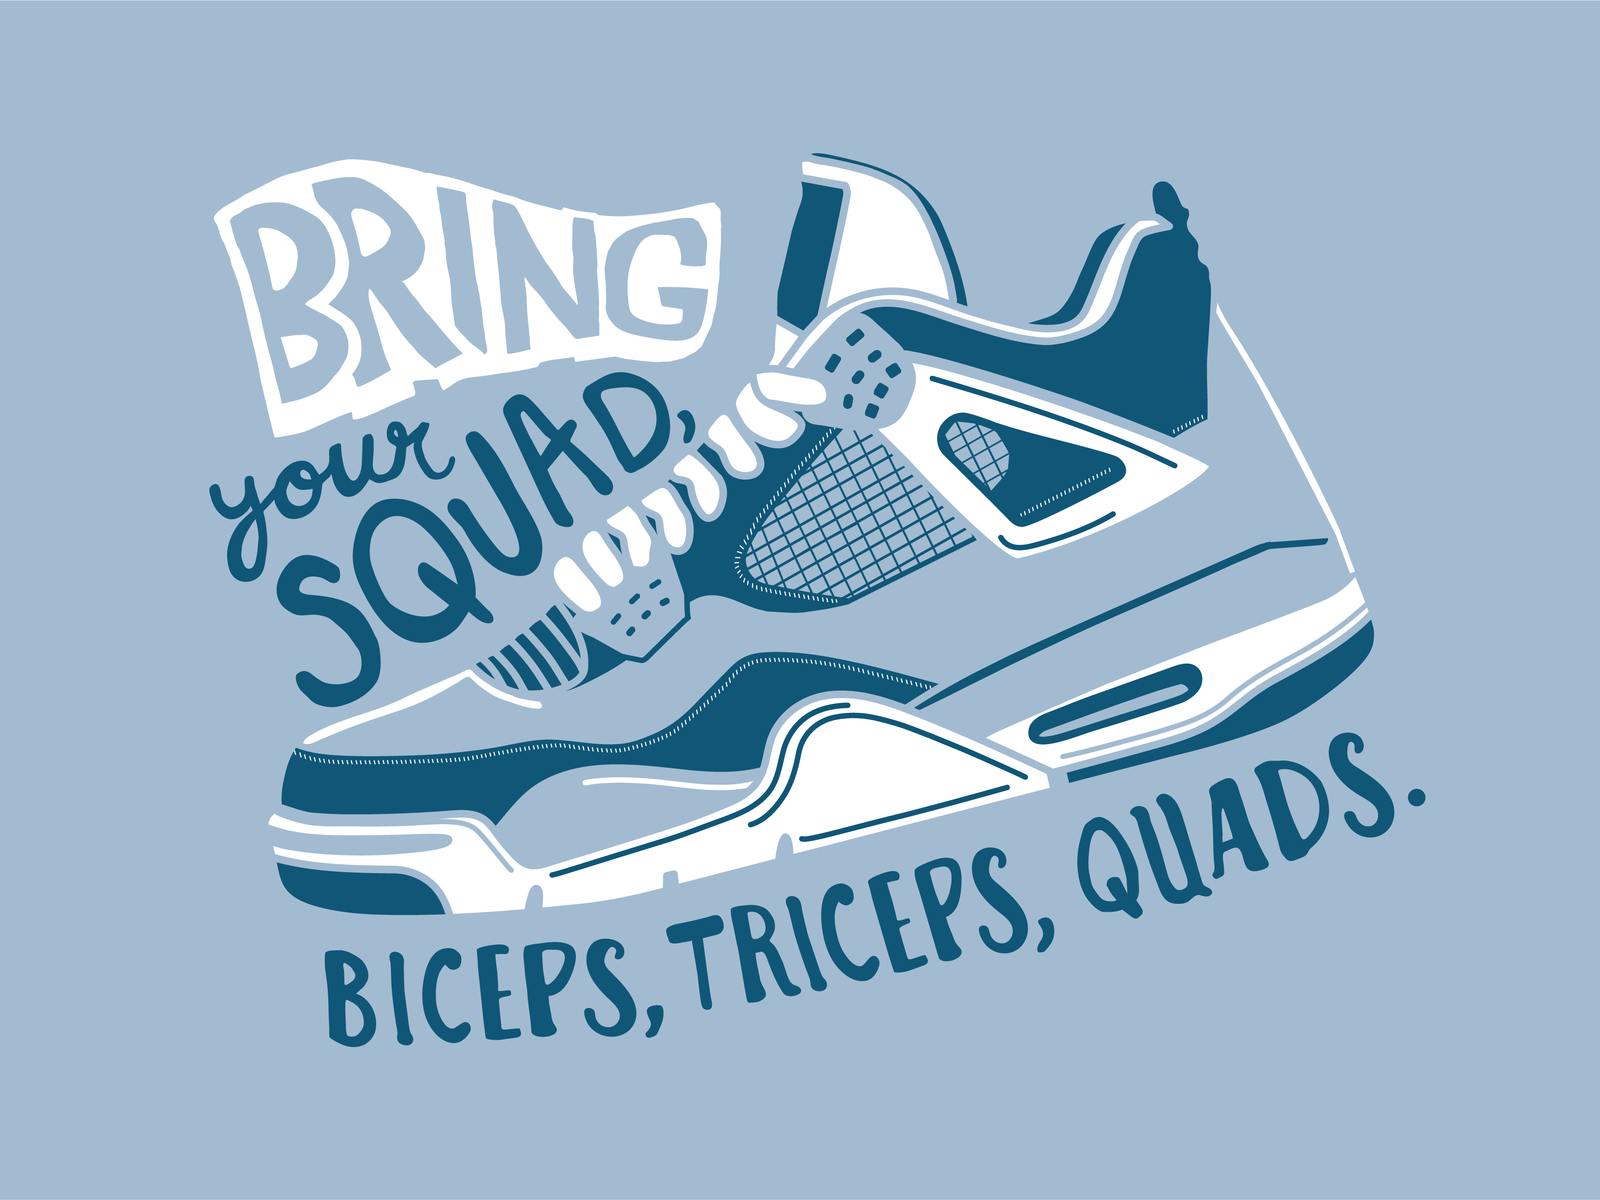 Work Out Time rap quads triceps biceps jayz illustration lettering wellness workout squad sneaker air jordan jay-z